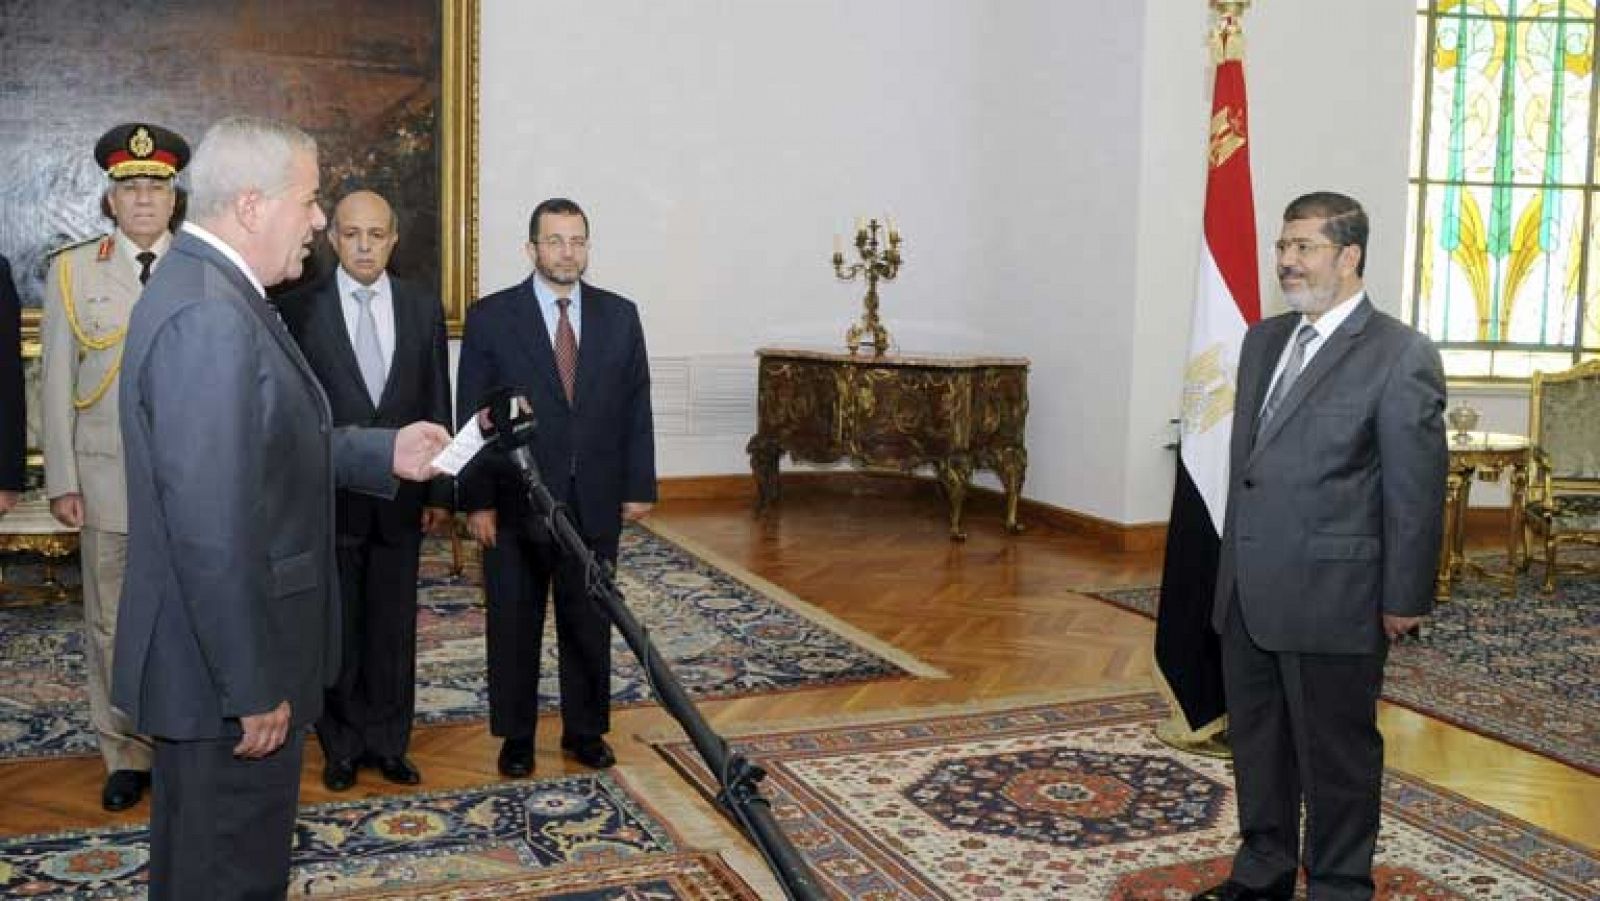 Concentración de poderes en manos del presidente egipcio Morsi